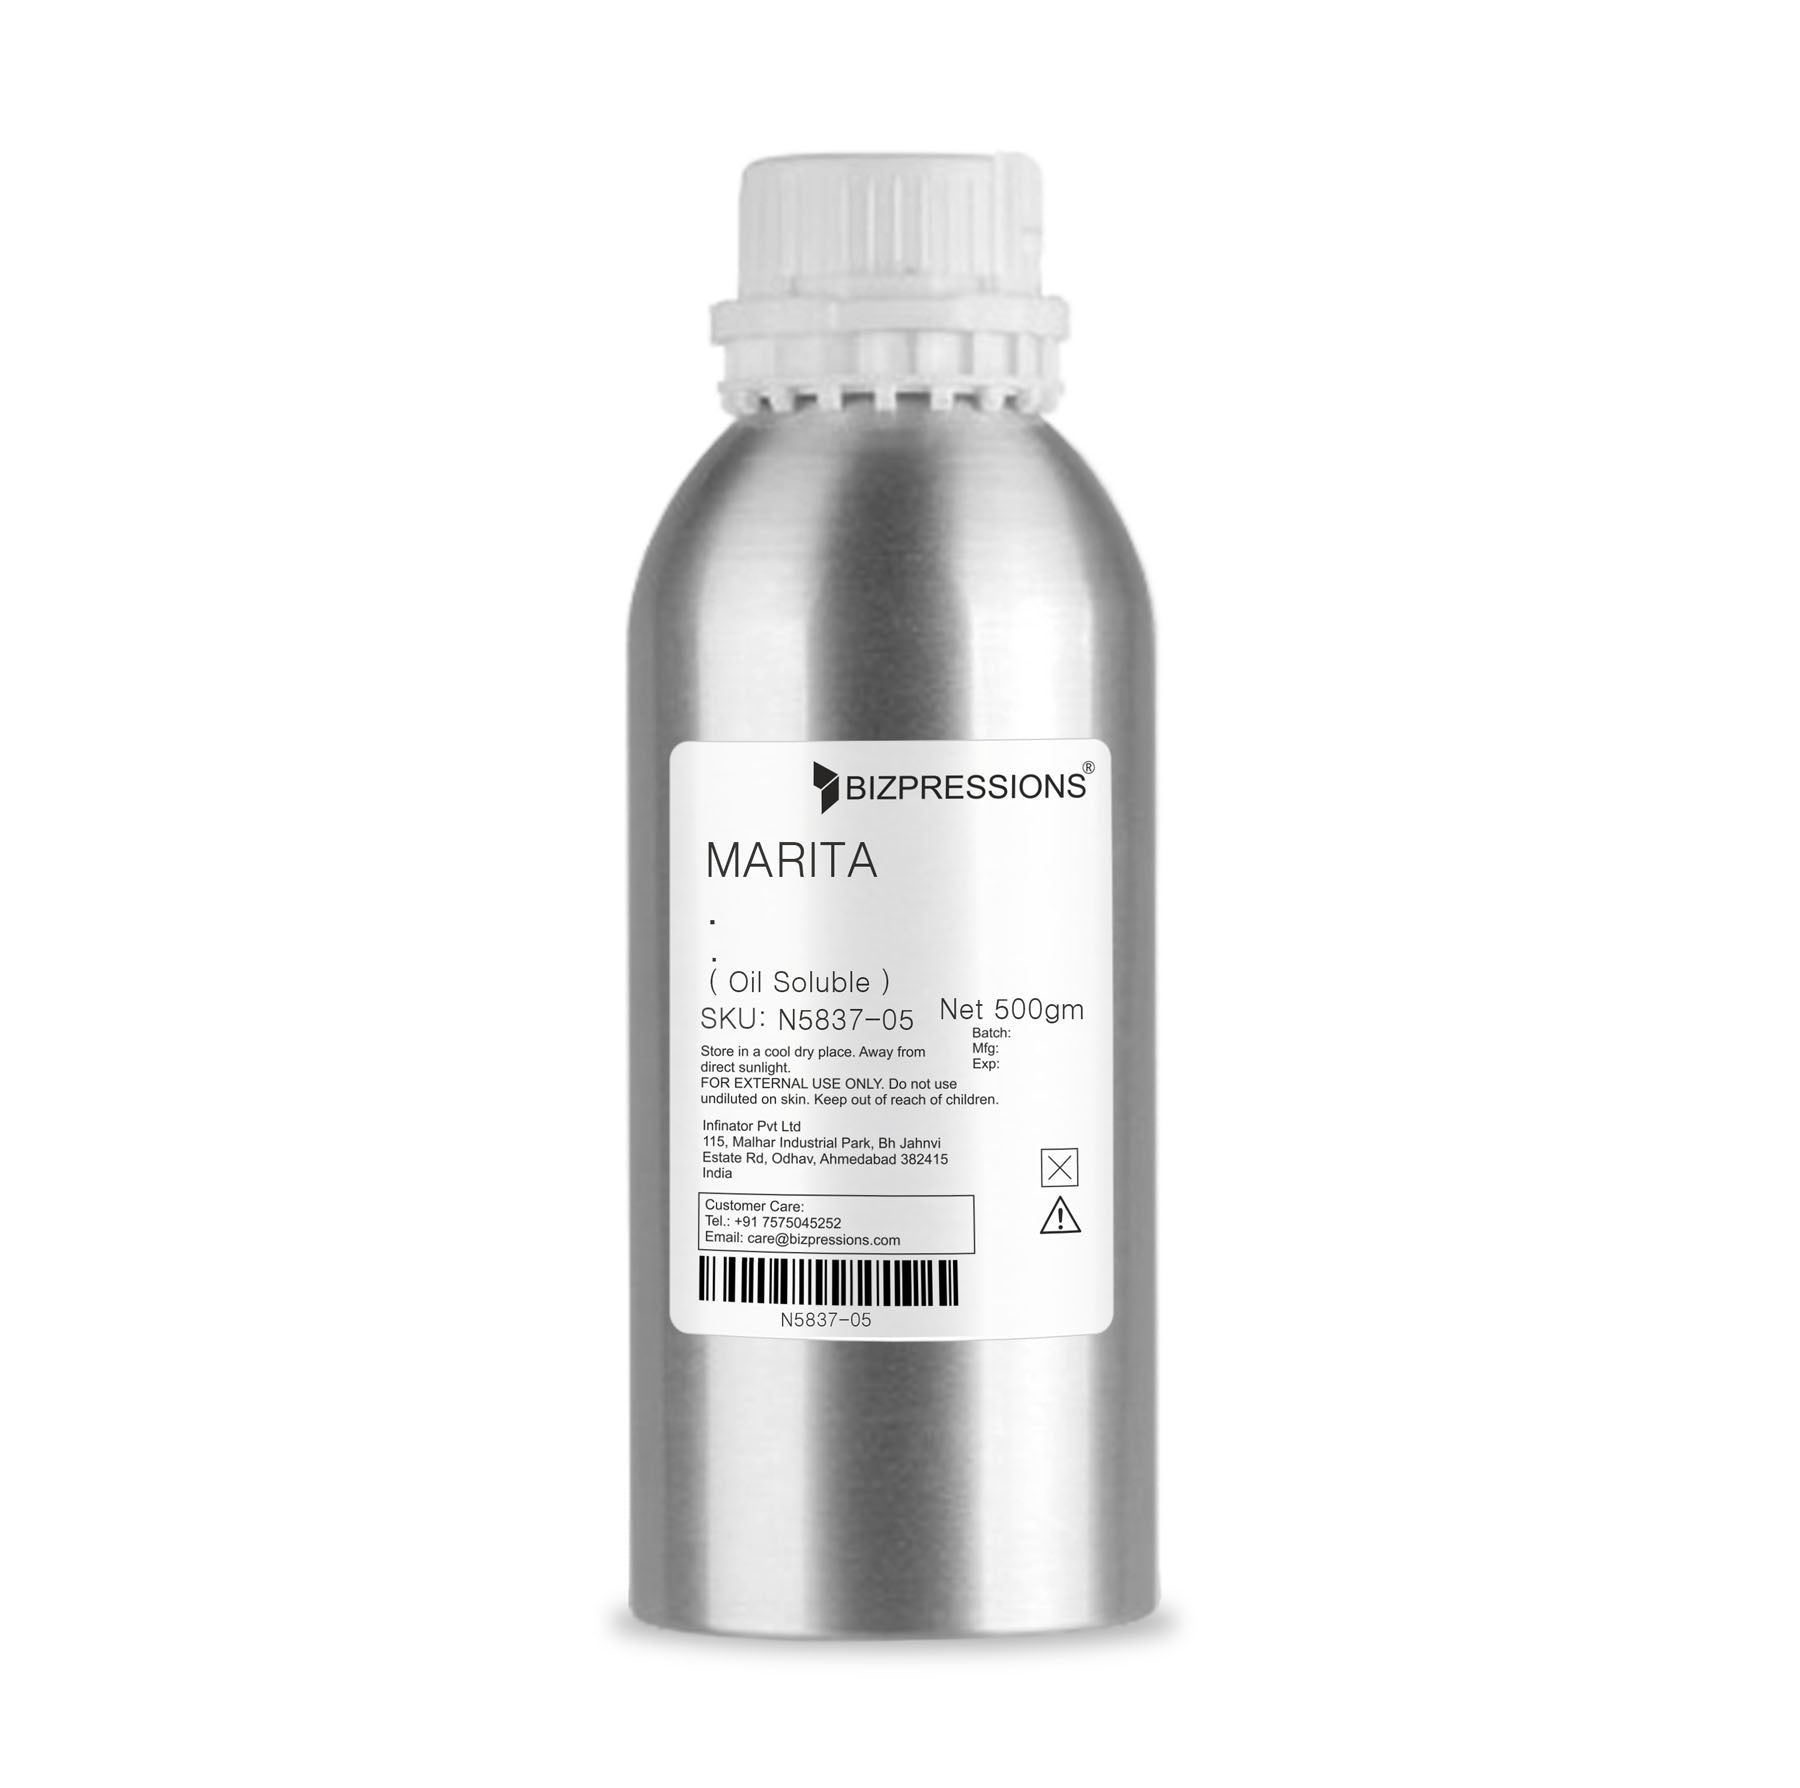 MARITA - Fragrance ( Oil Soluble ) - 500 gm